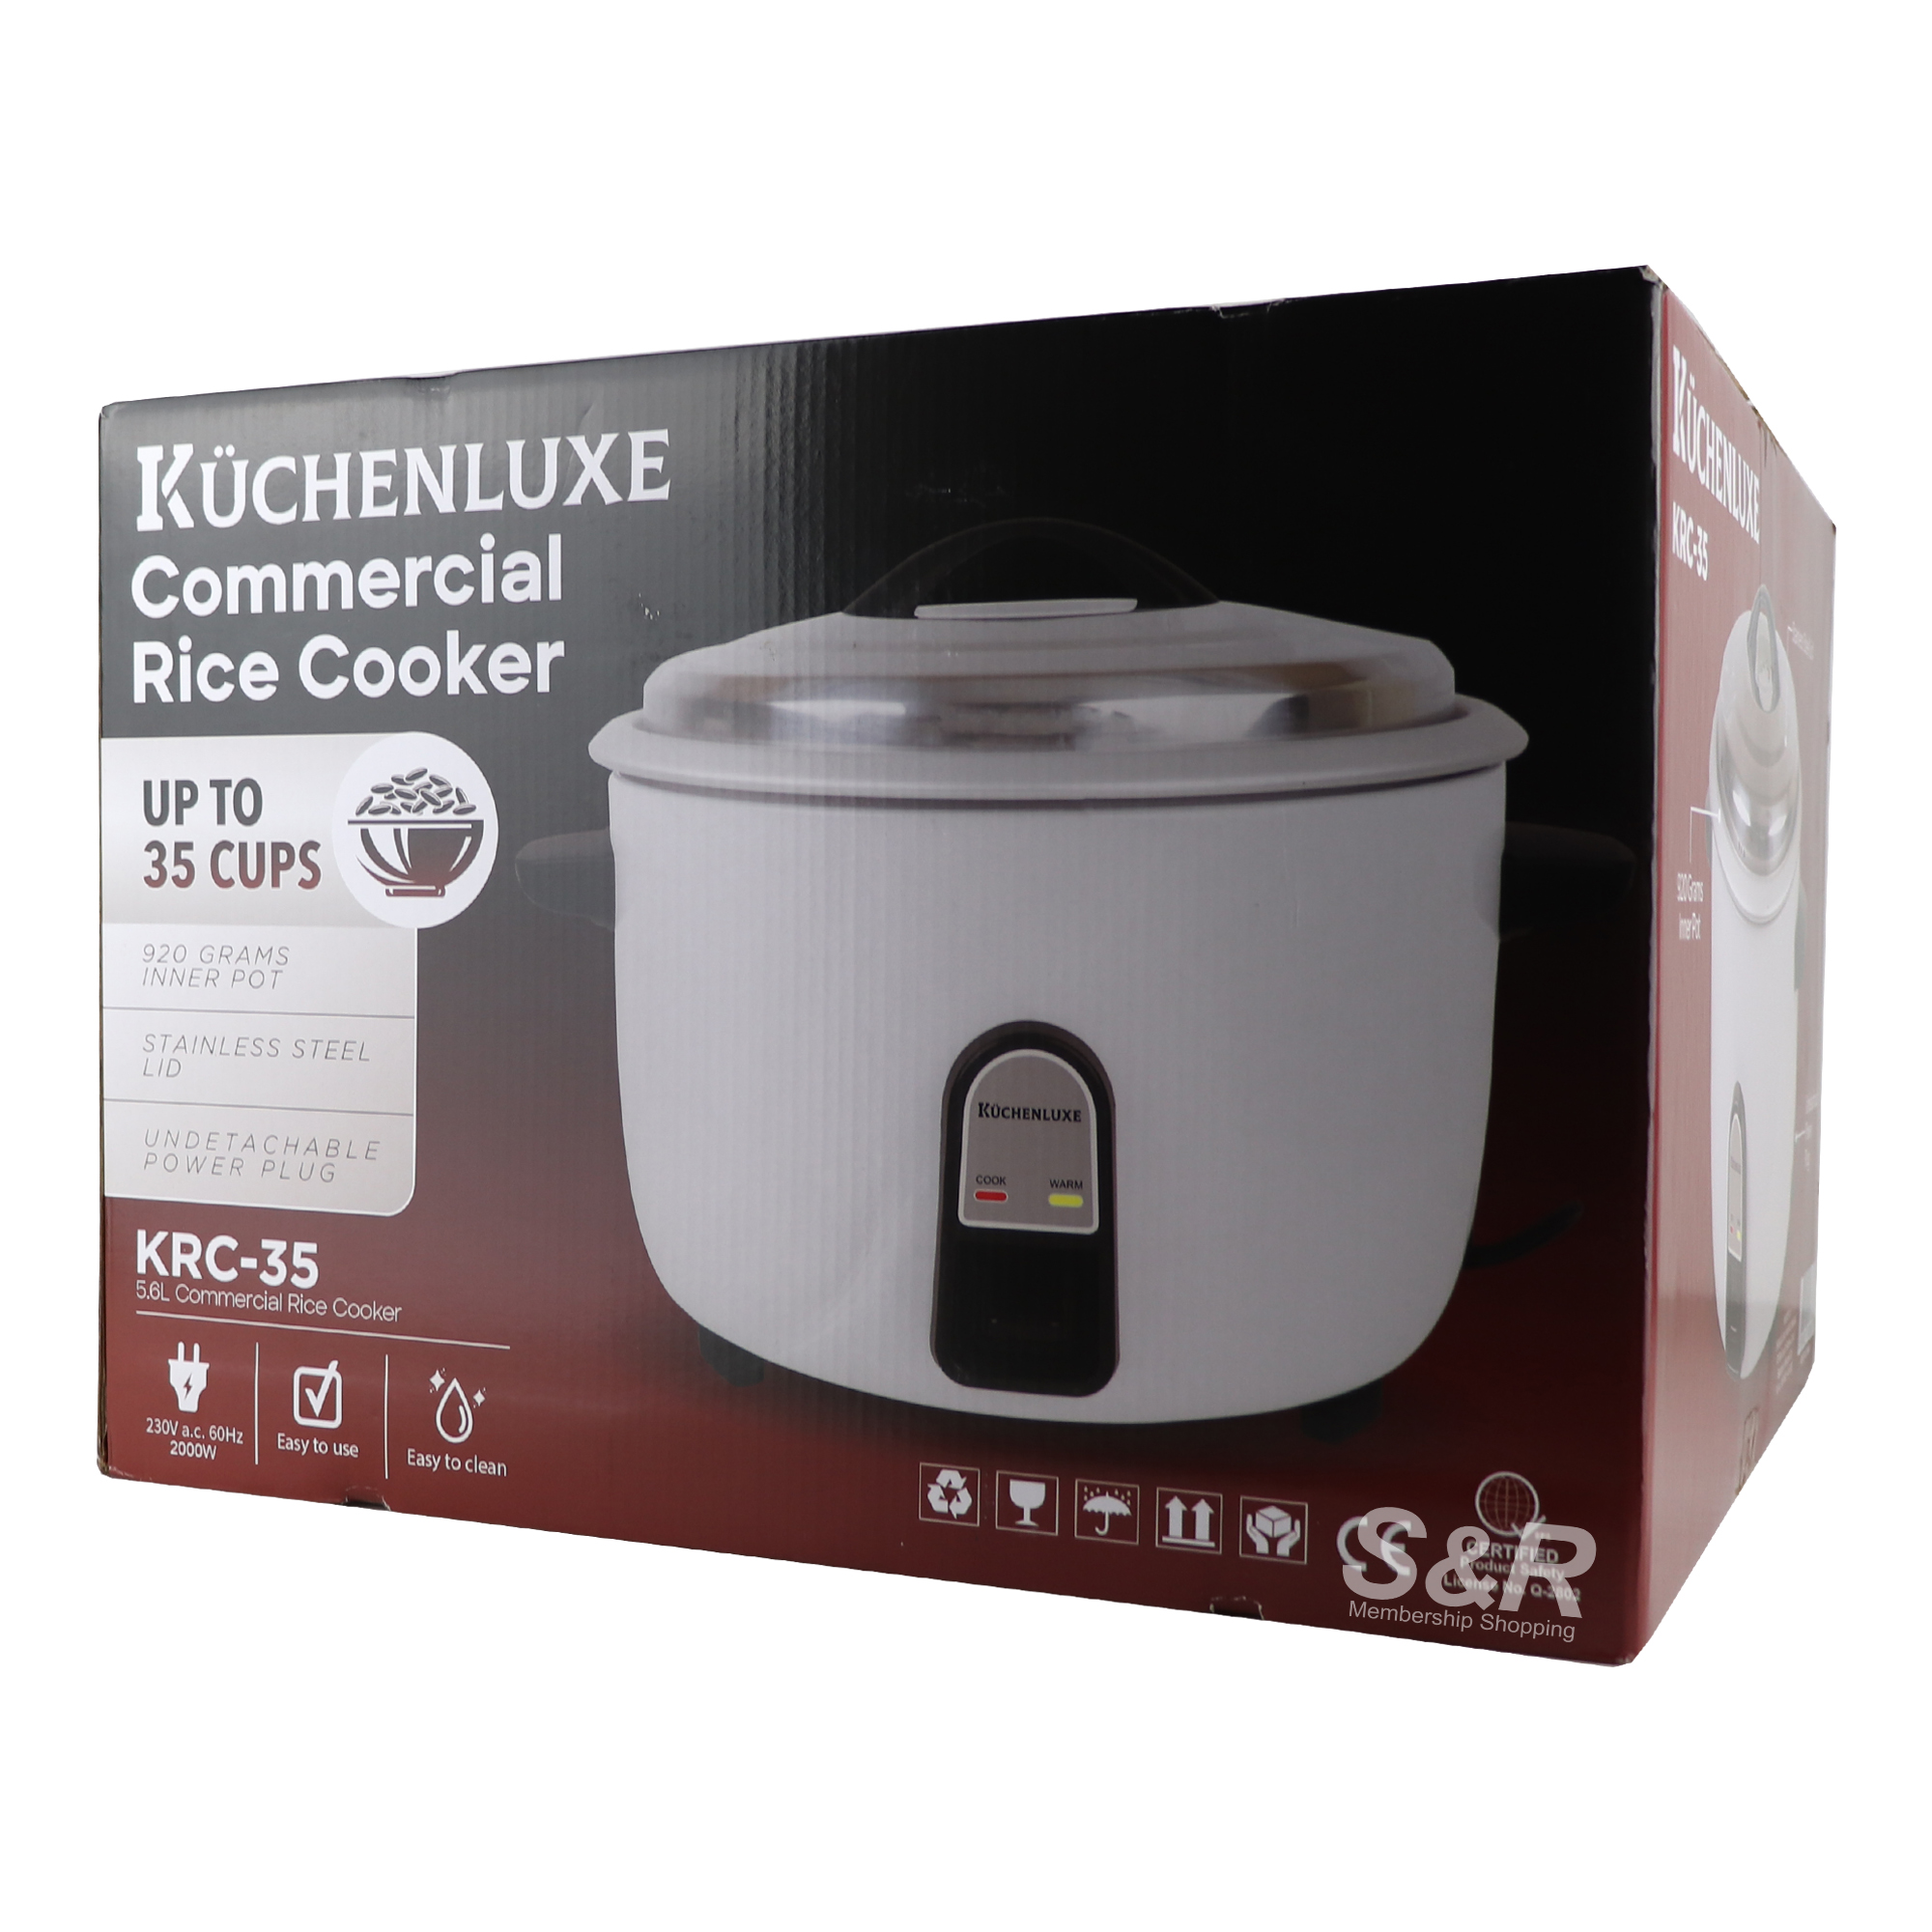 Kuchenluxe Commercial Rice Cooker